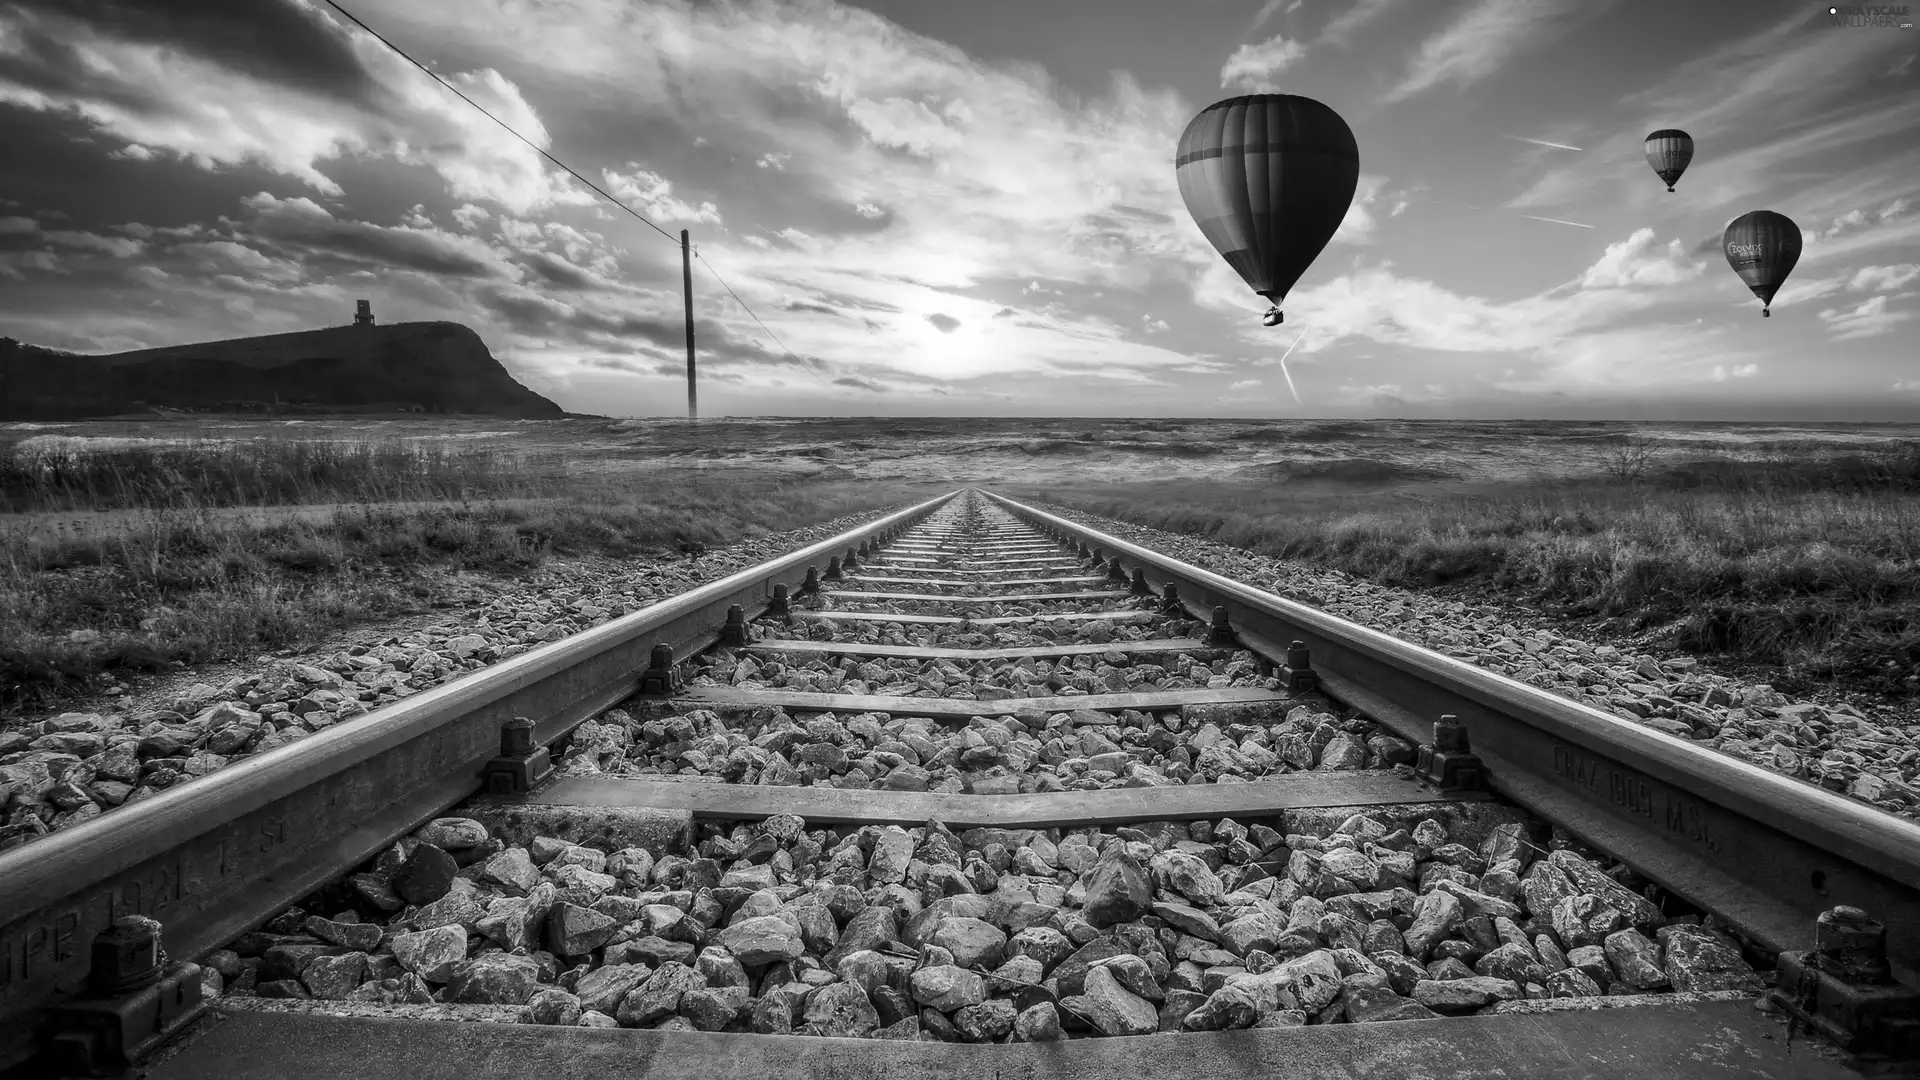 ##, sea, Balloons, railway